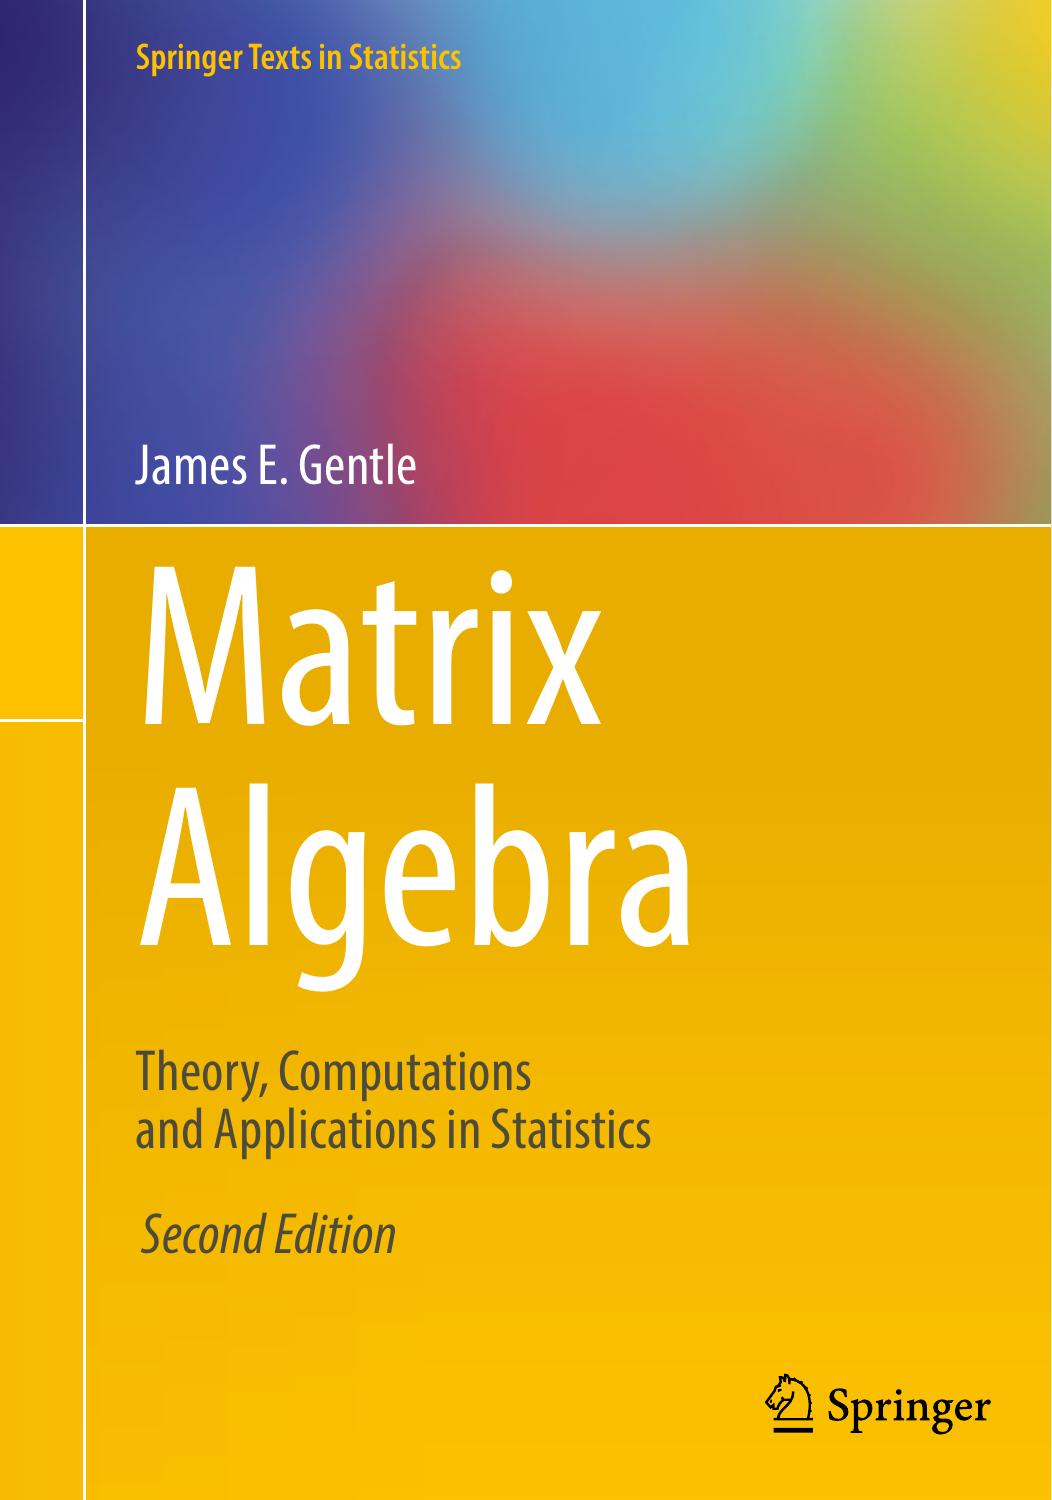 Matrix Algebra  Theory, Computations and Applications in Statistics 2017